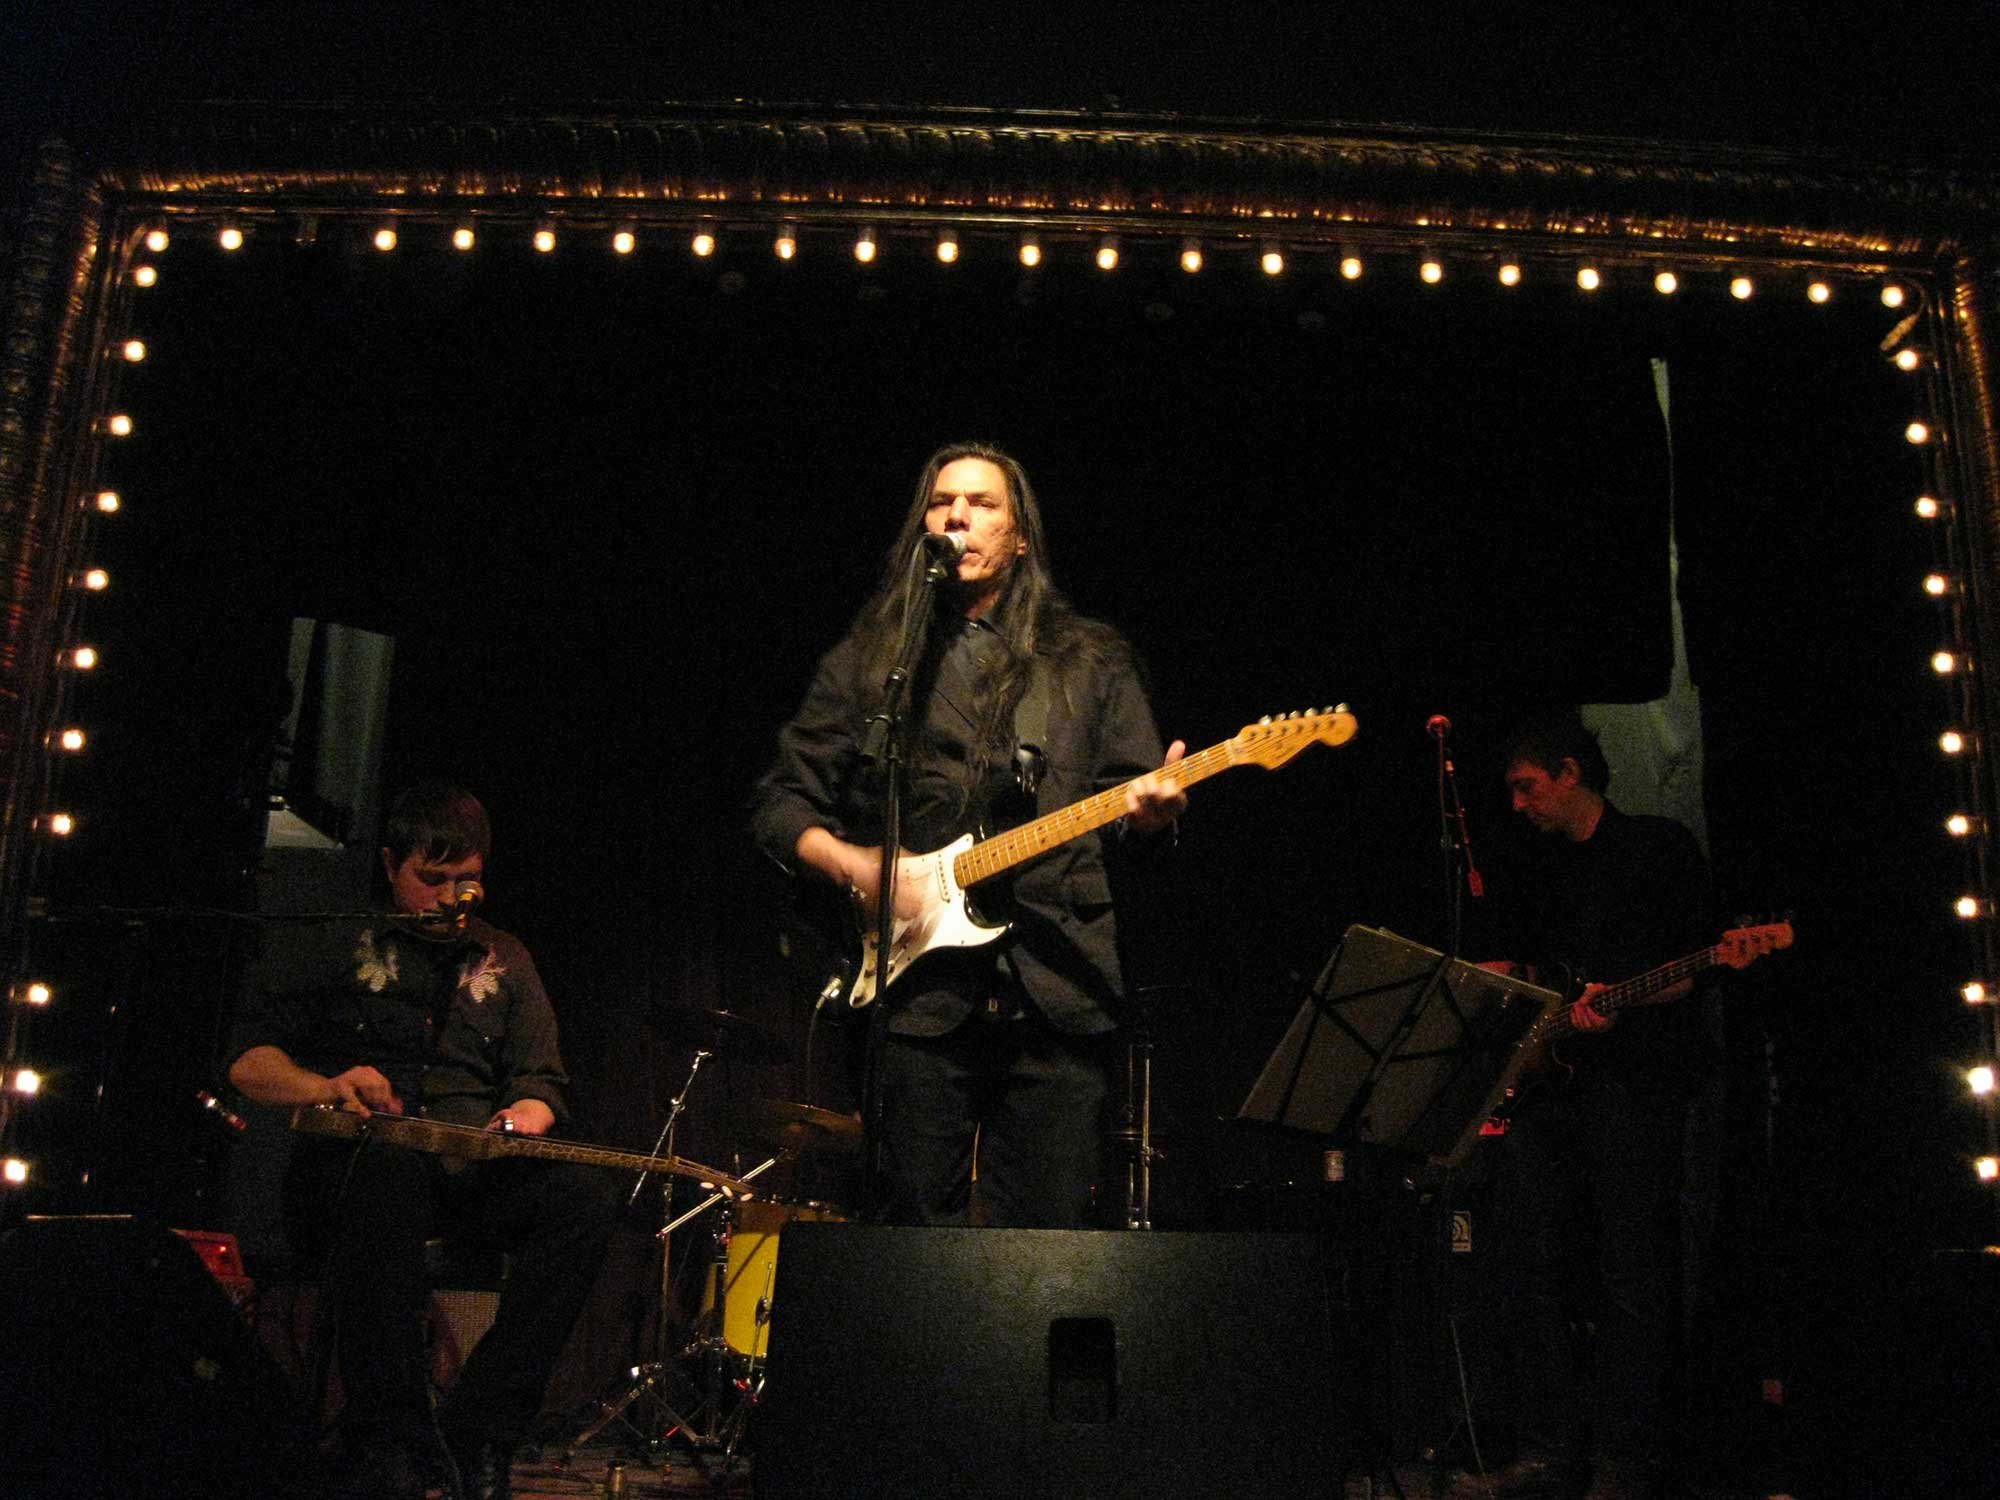  Parlor Grand performing at Union Pool, Brooklyn, NY, 2009 